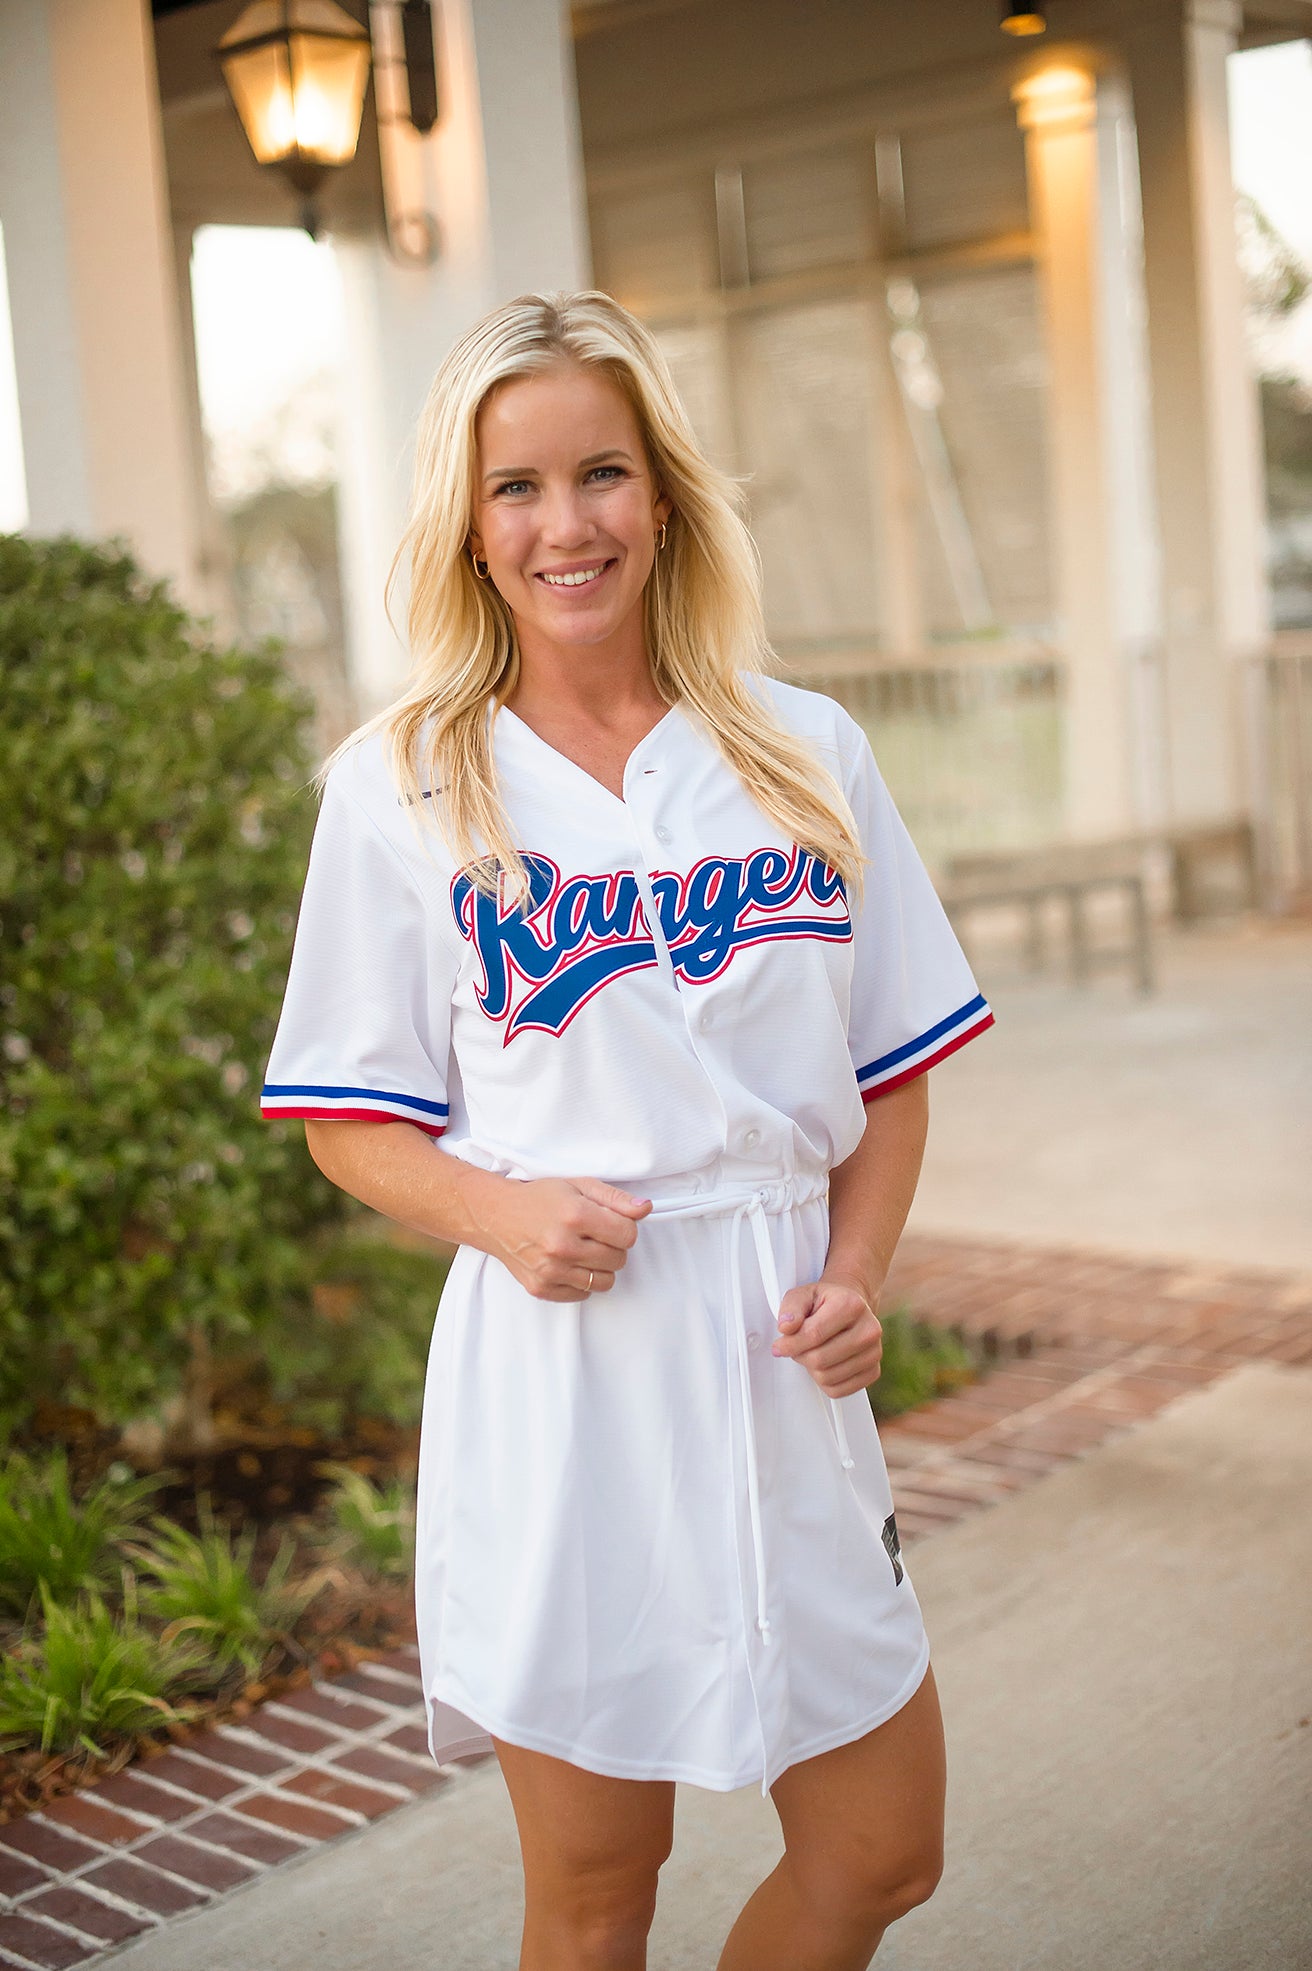 baseball jersey over dress